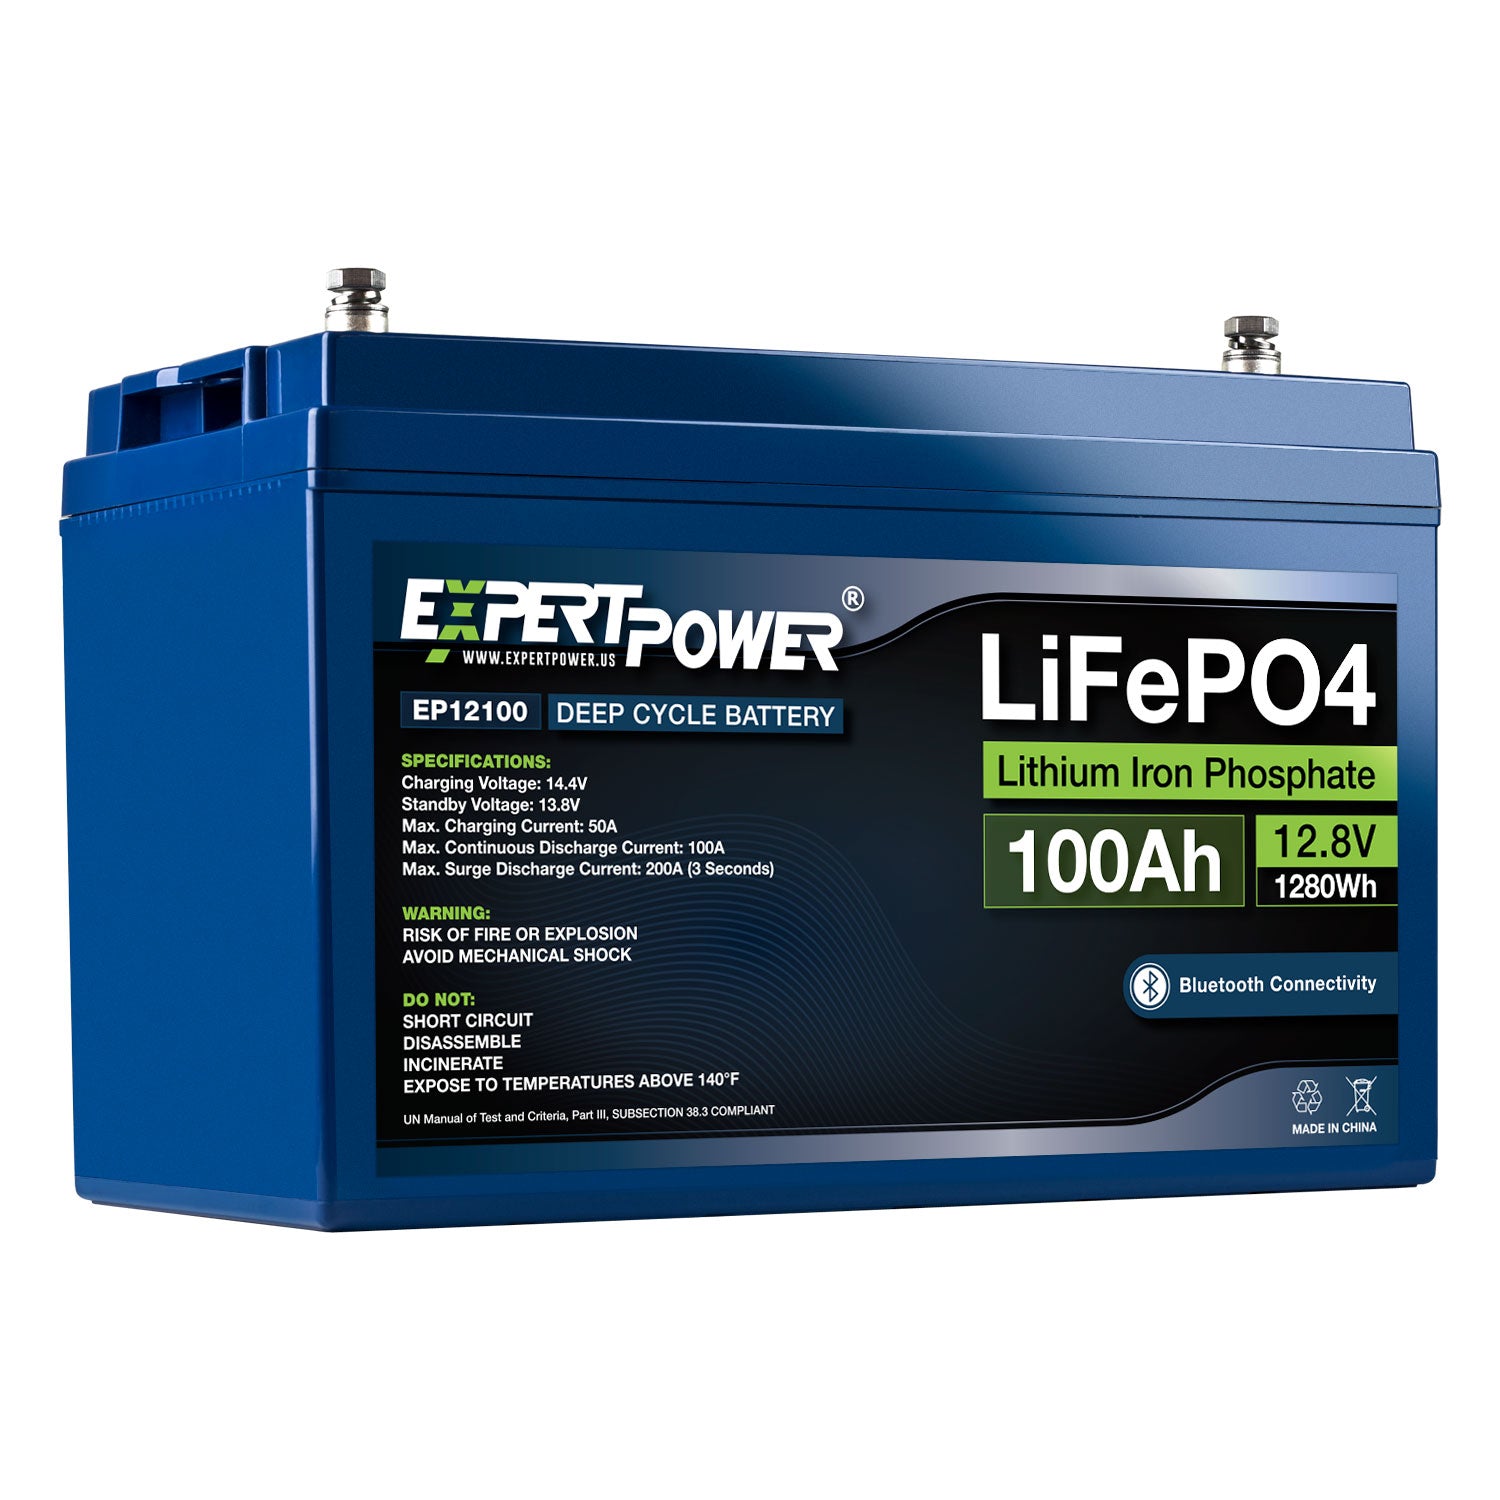 Feence Mini LiFePO4 Bluetooth 100 Ah 12 V Battery with BMS, 4000